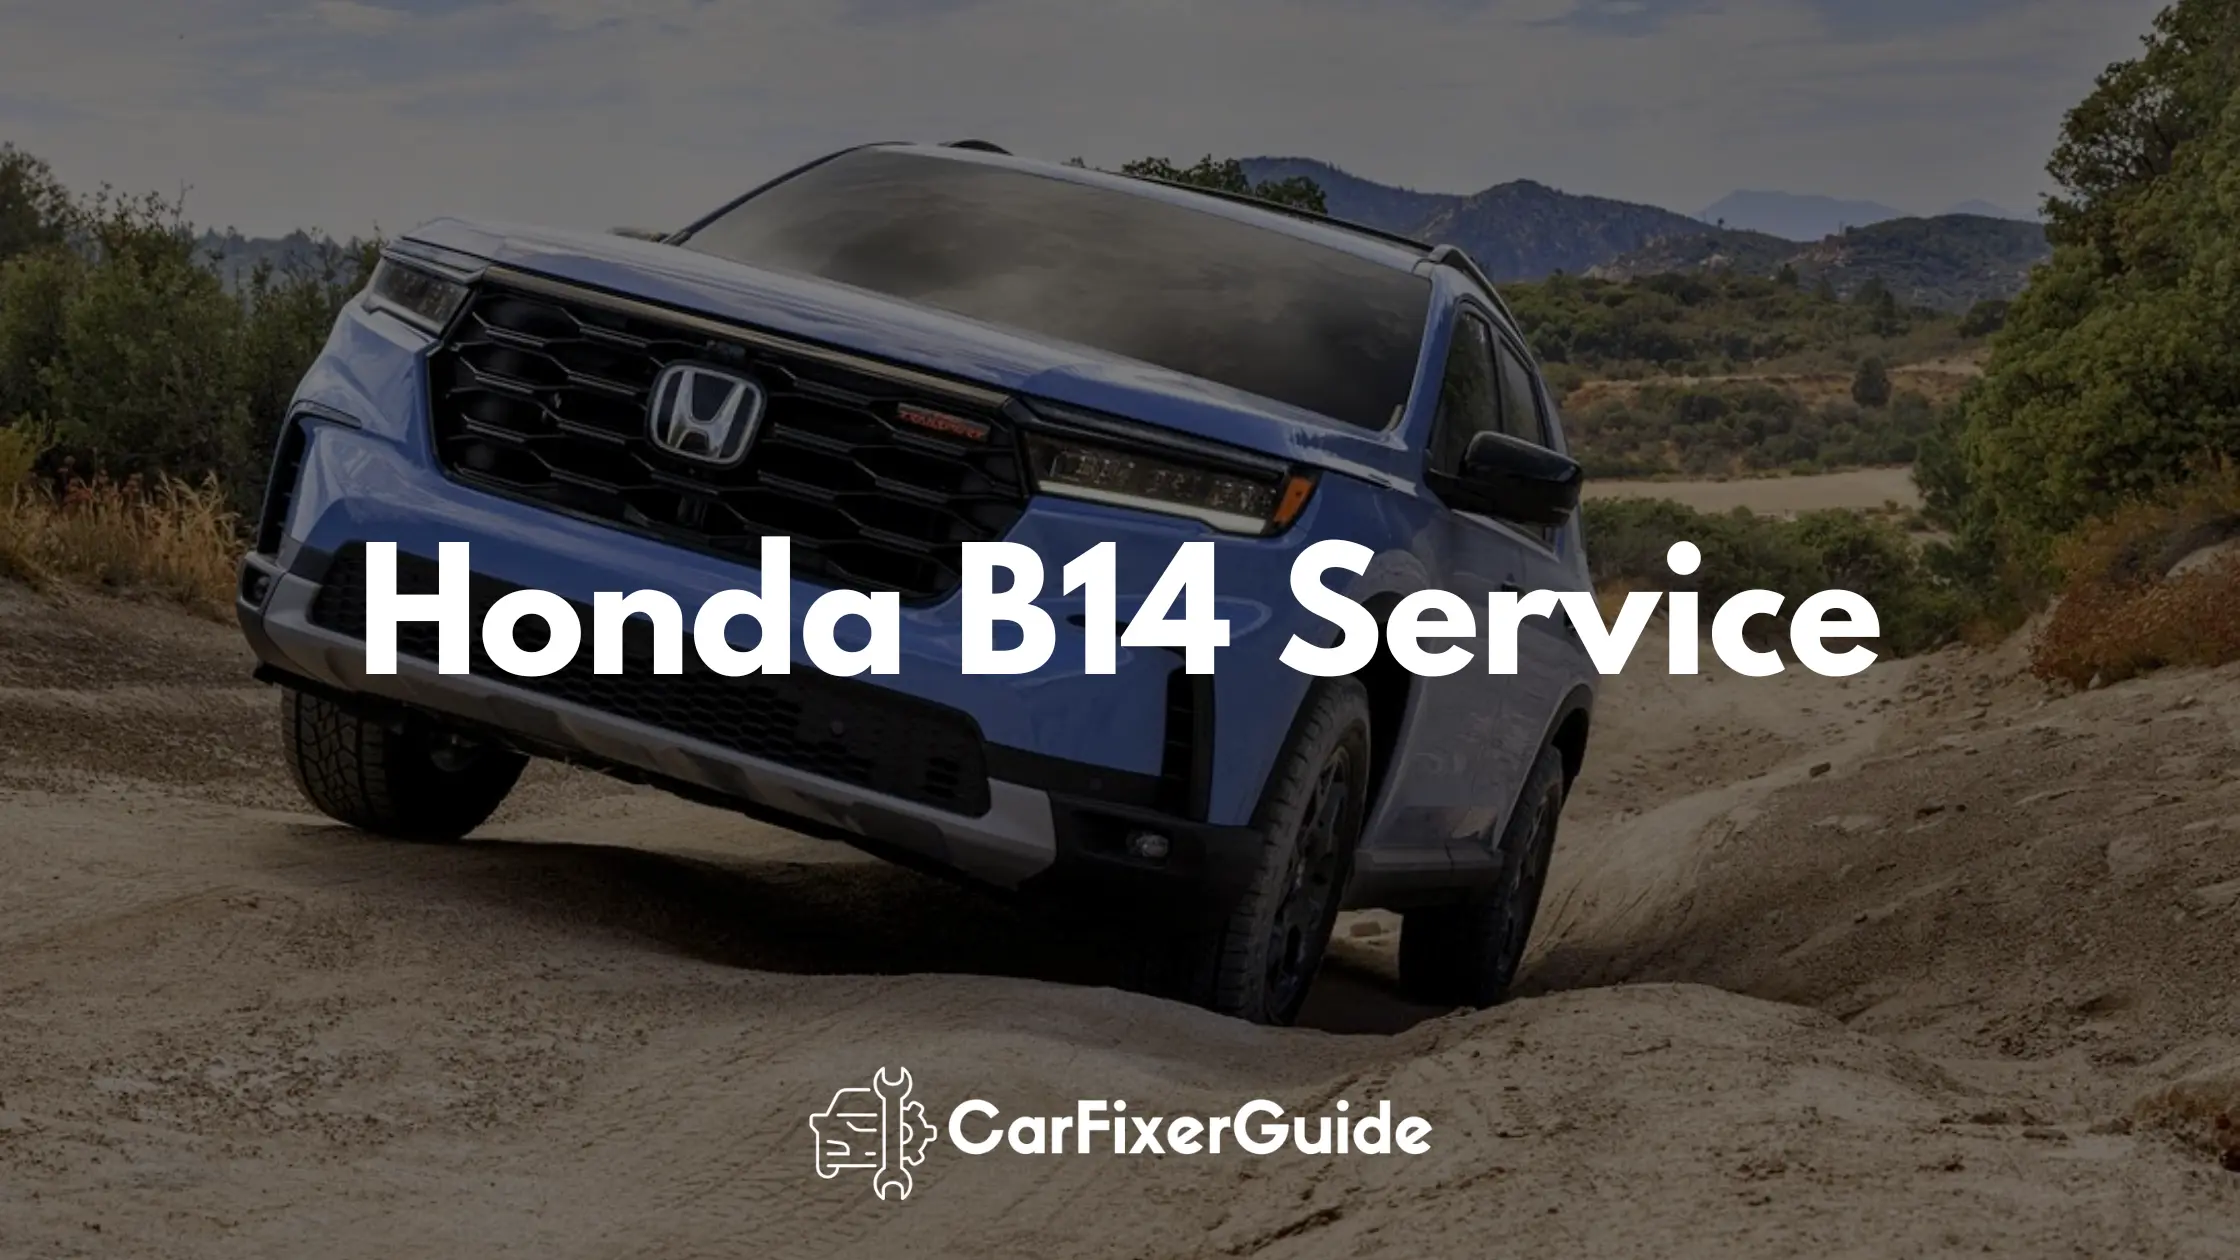 Honda B14 Service